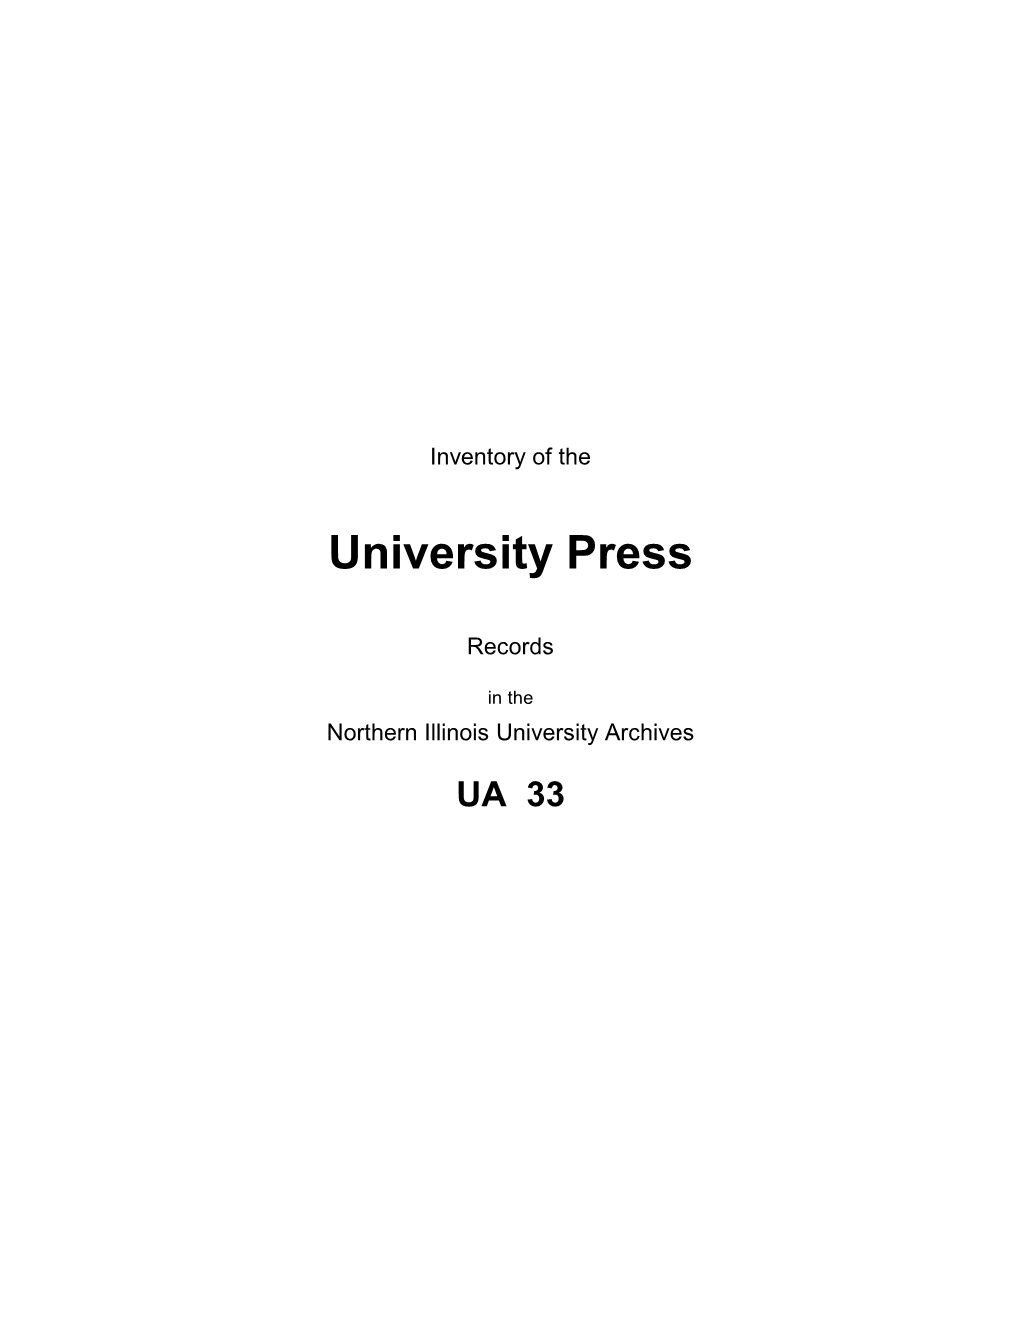 University Press, 1965+